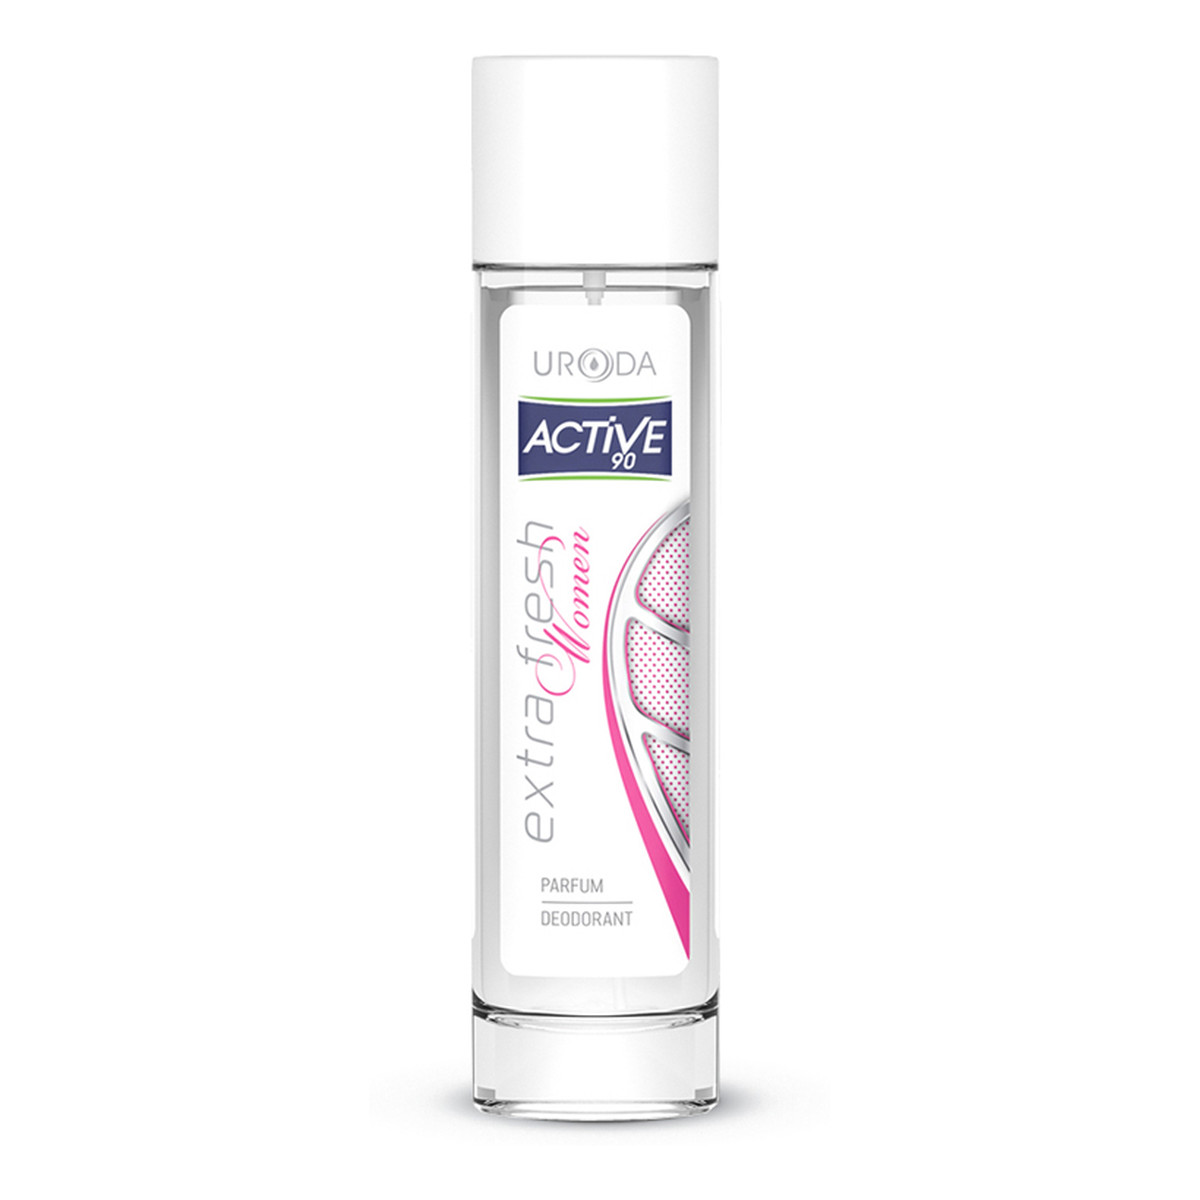 Active 90 Dla Kobiet Extra Fresh Dezodorant Perfumowany 75ml